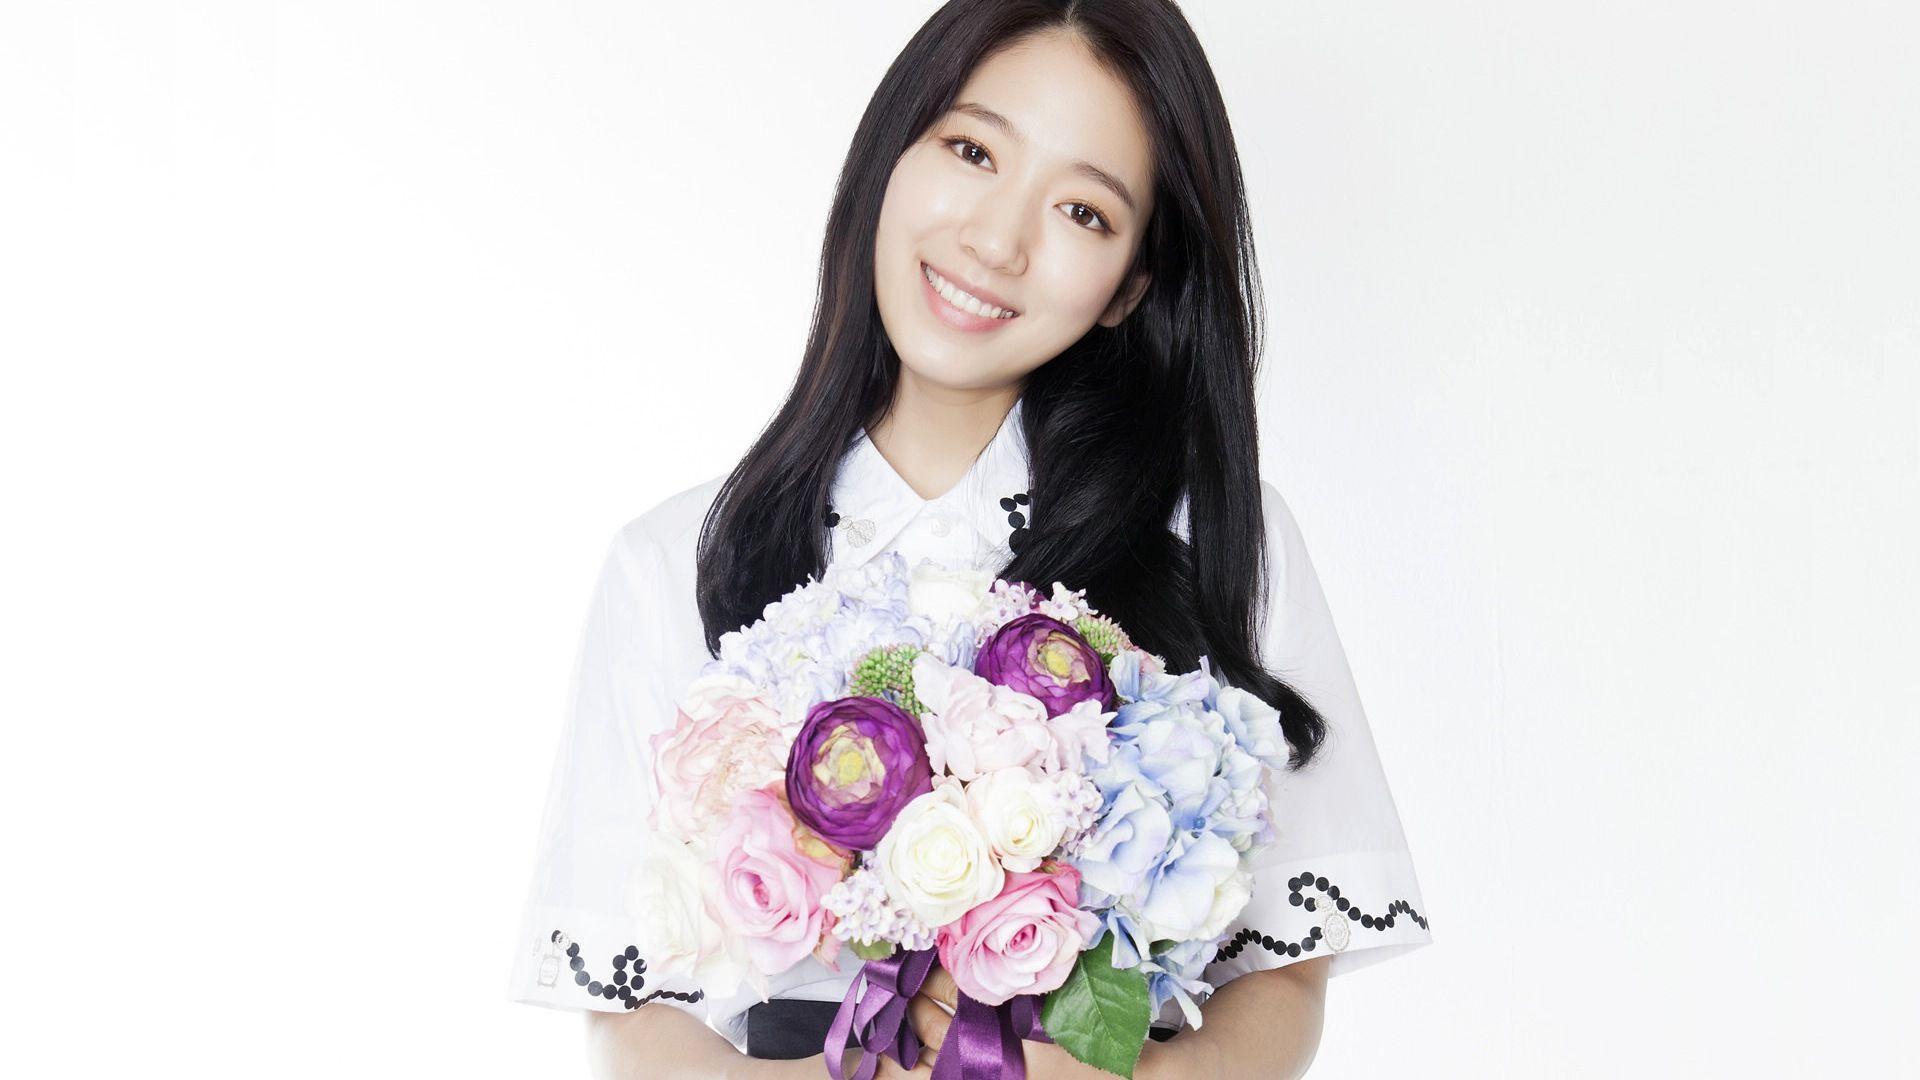 South Korean actress Park Shin Hye HD Wallpapers.